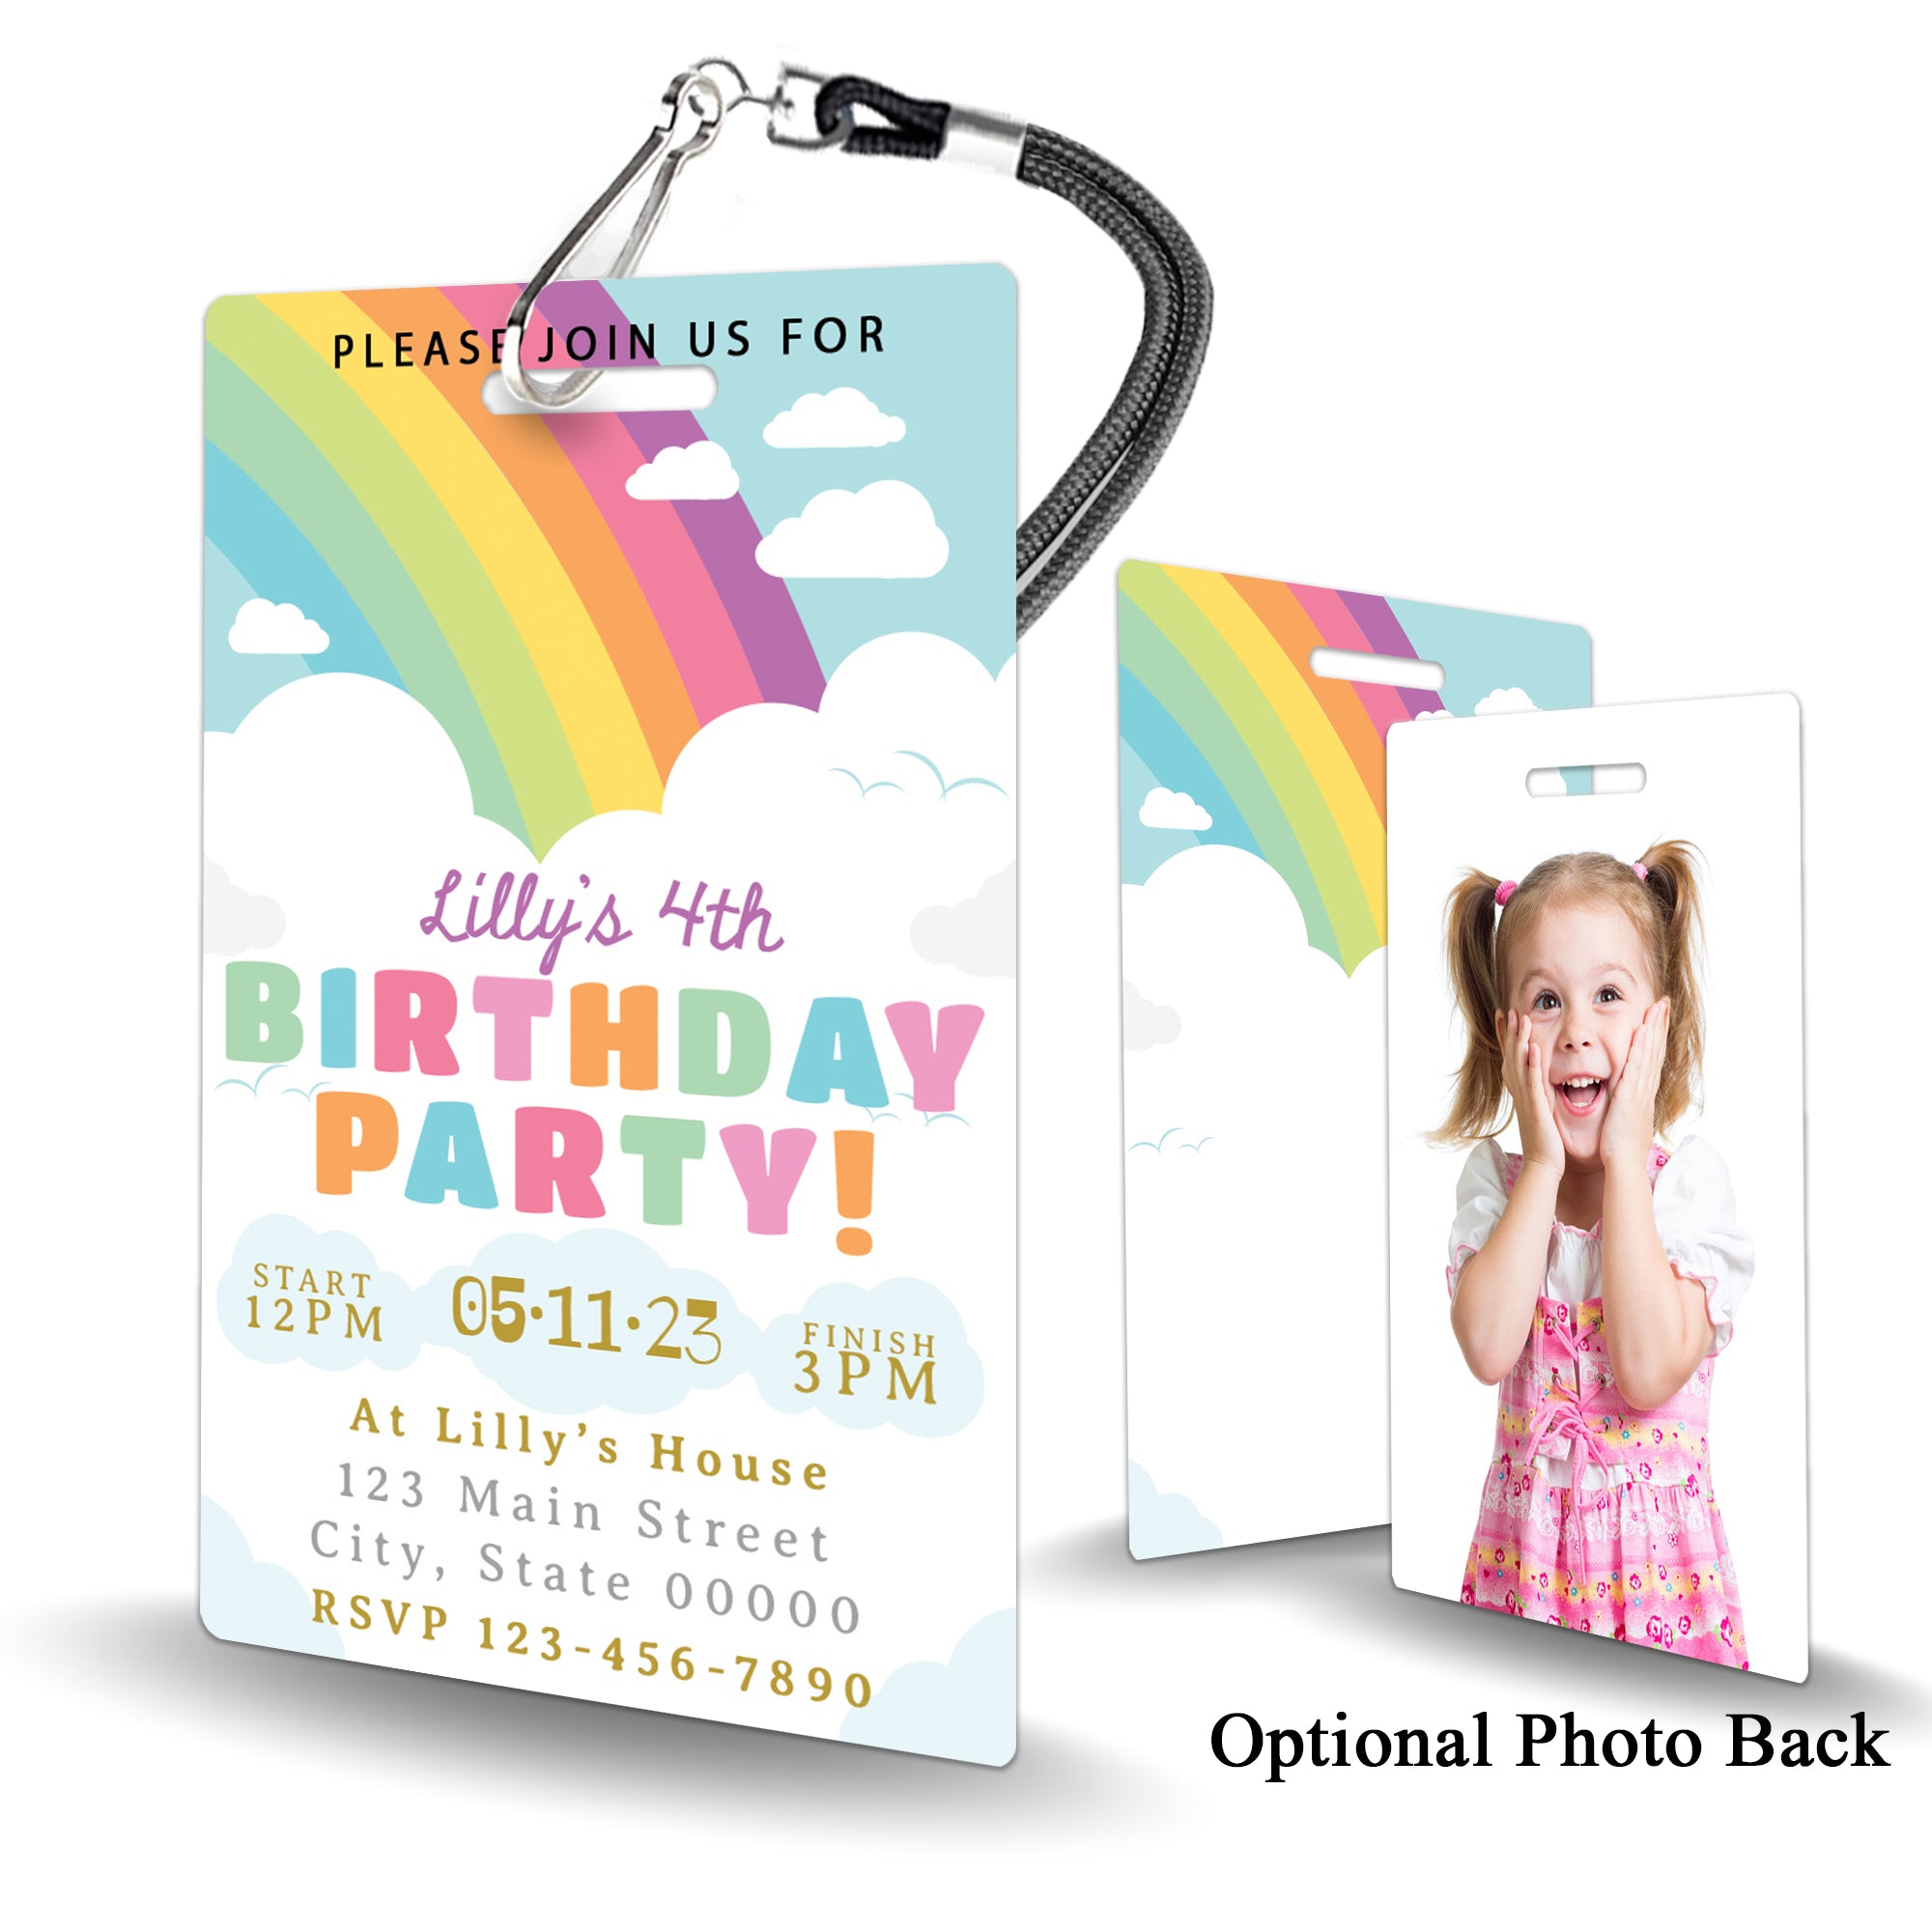 Rainbow Birthday Invitation